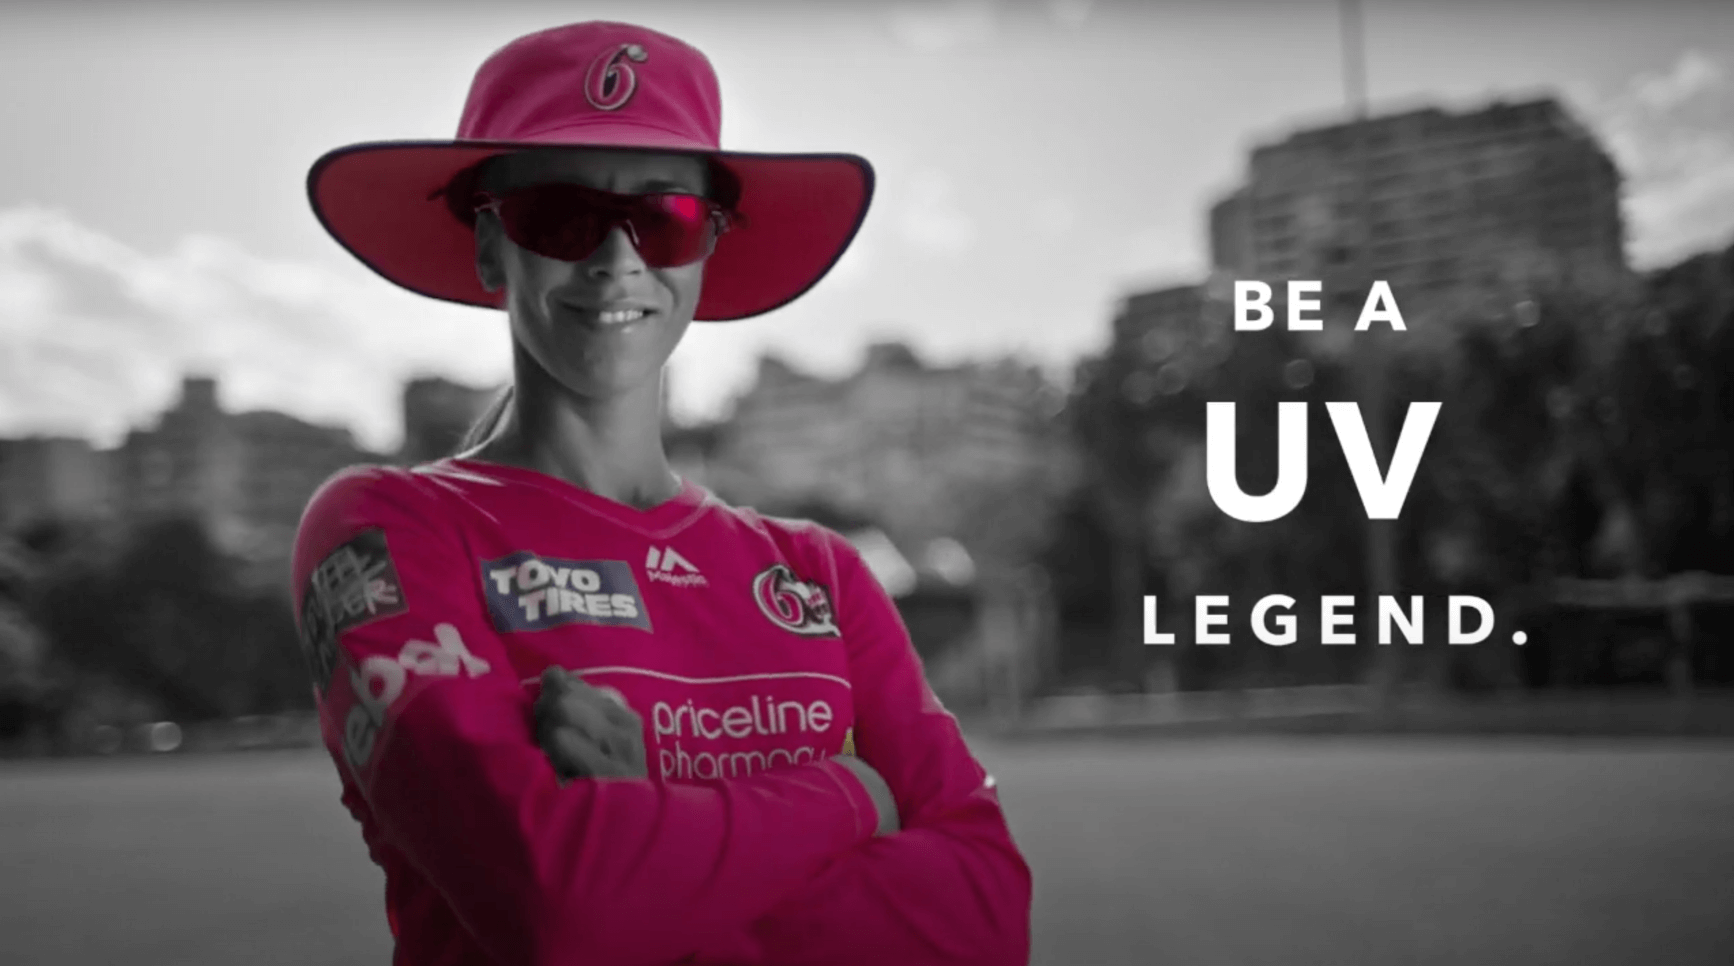 Be a UV Legend campaign image